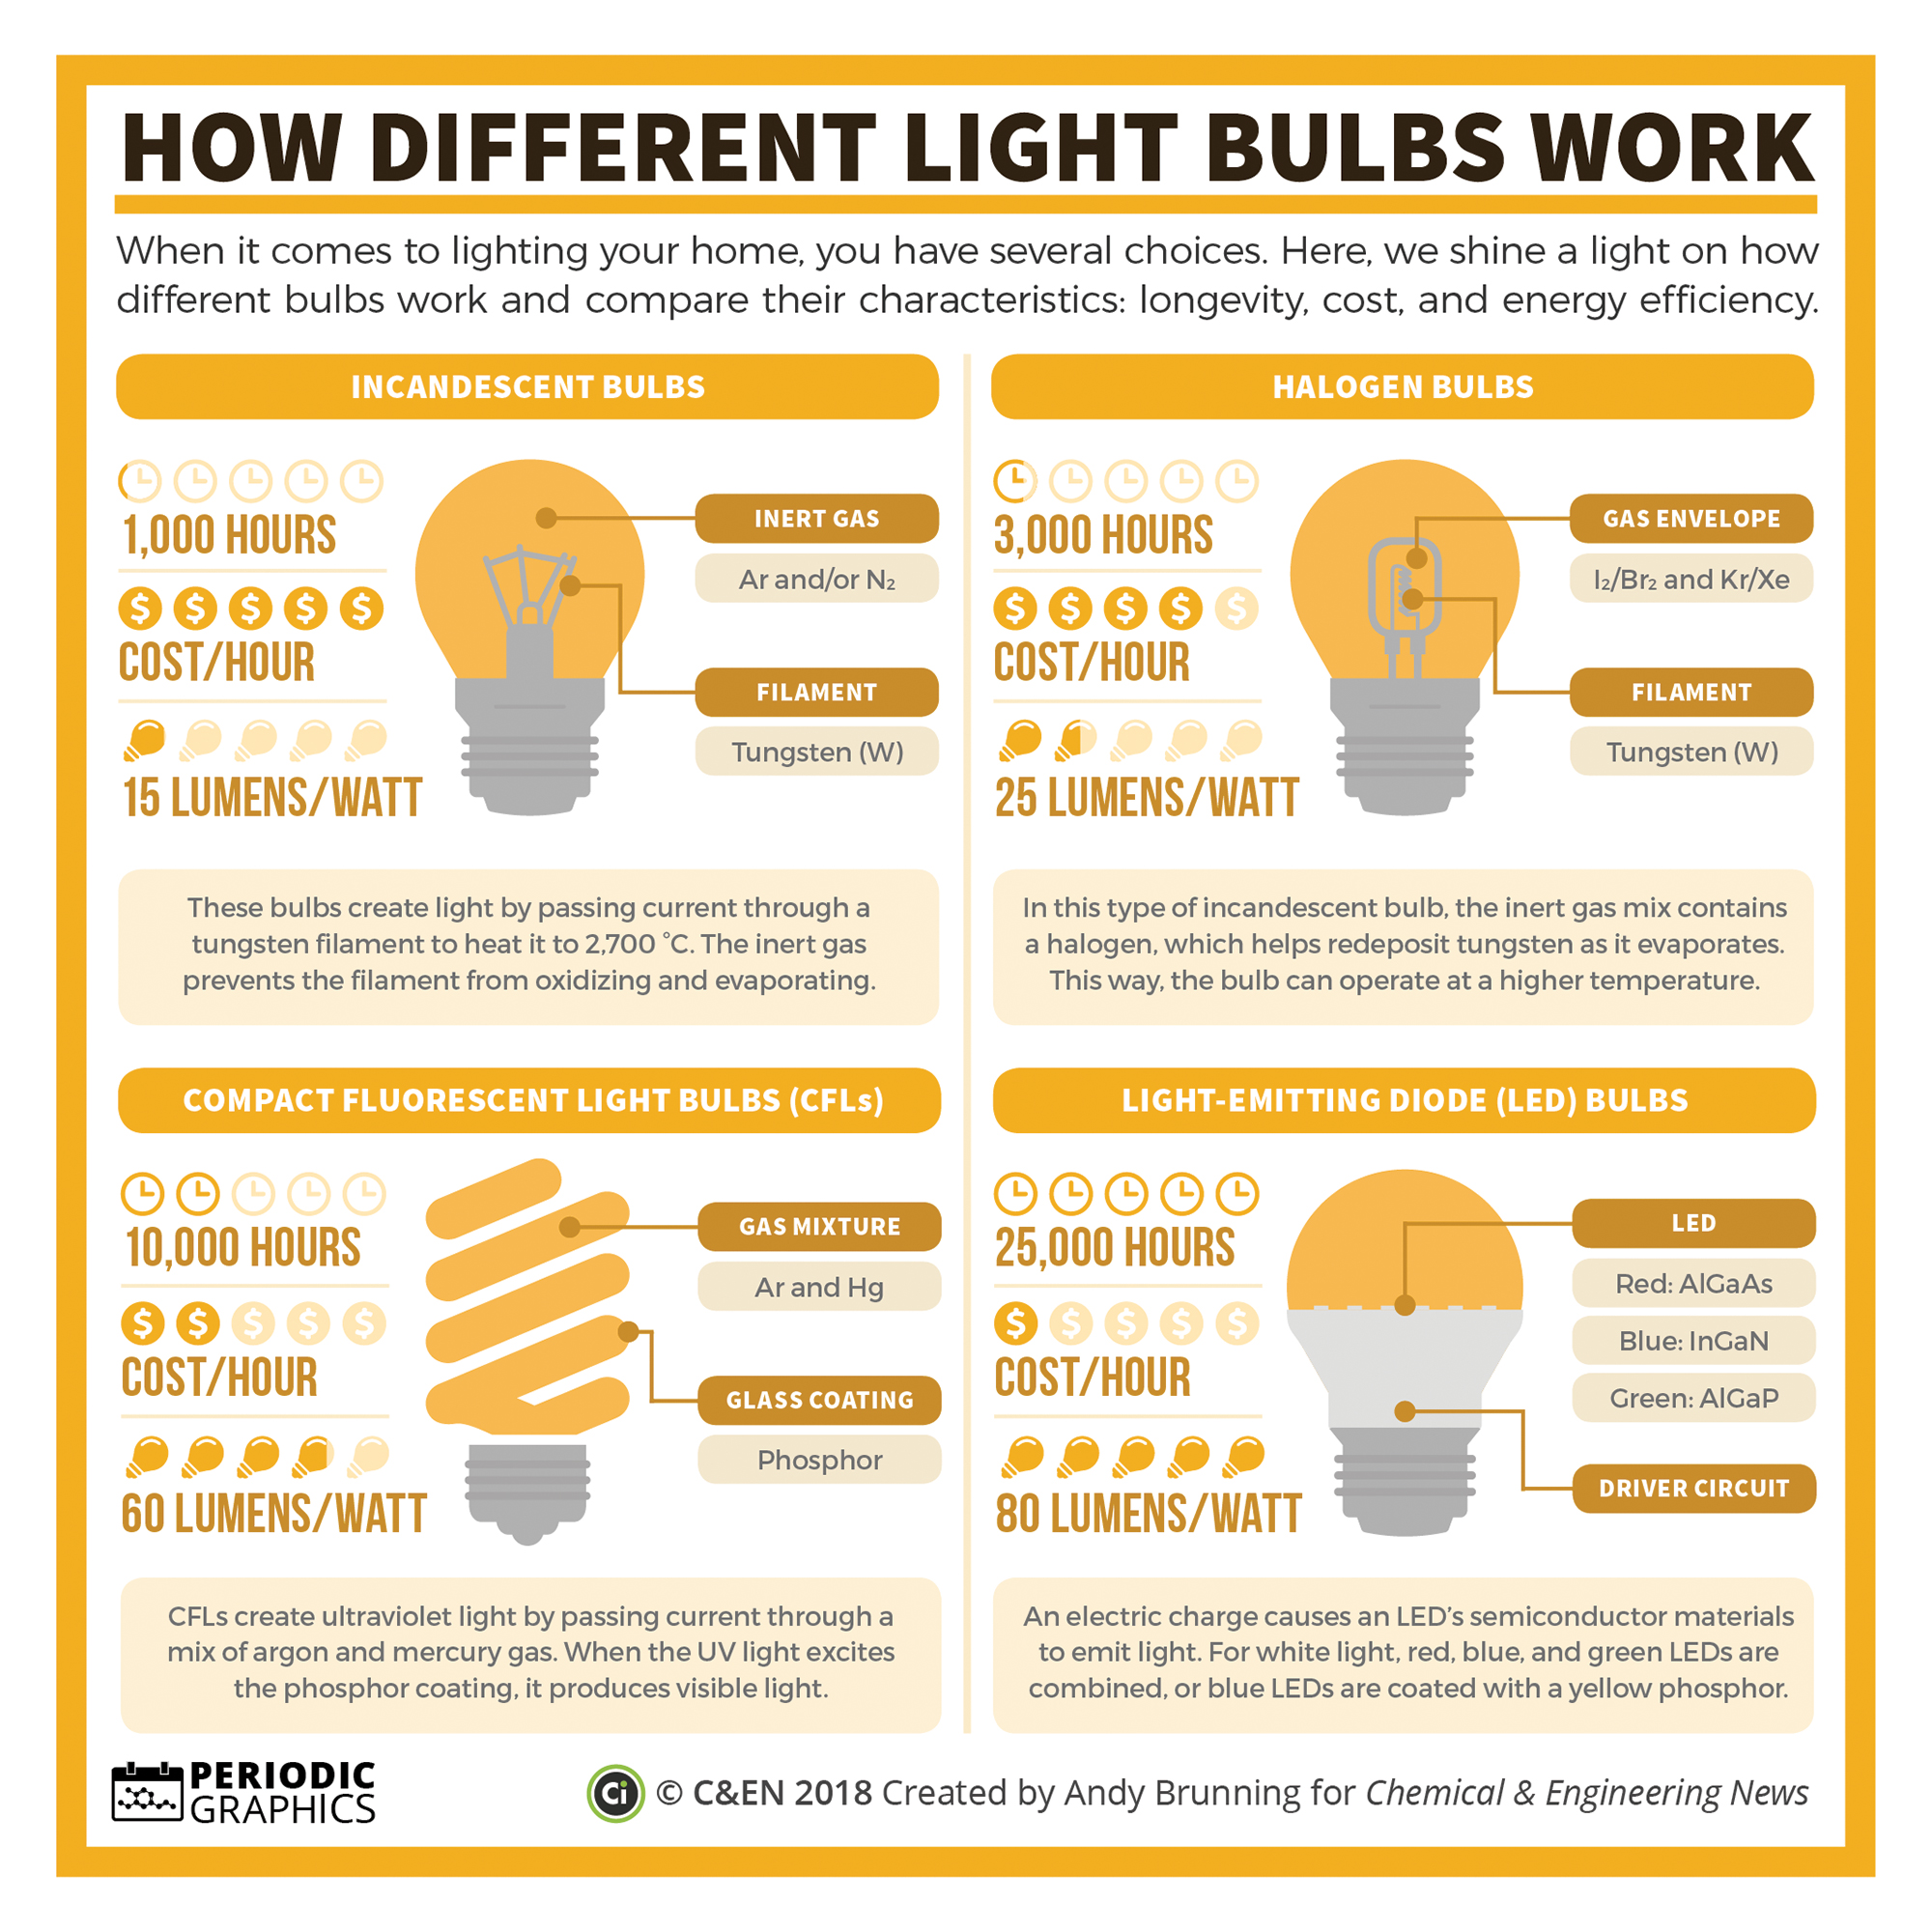 kandidatskole astronomi skade Periodic graphics: How different light bulbs work